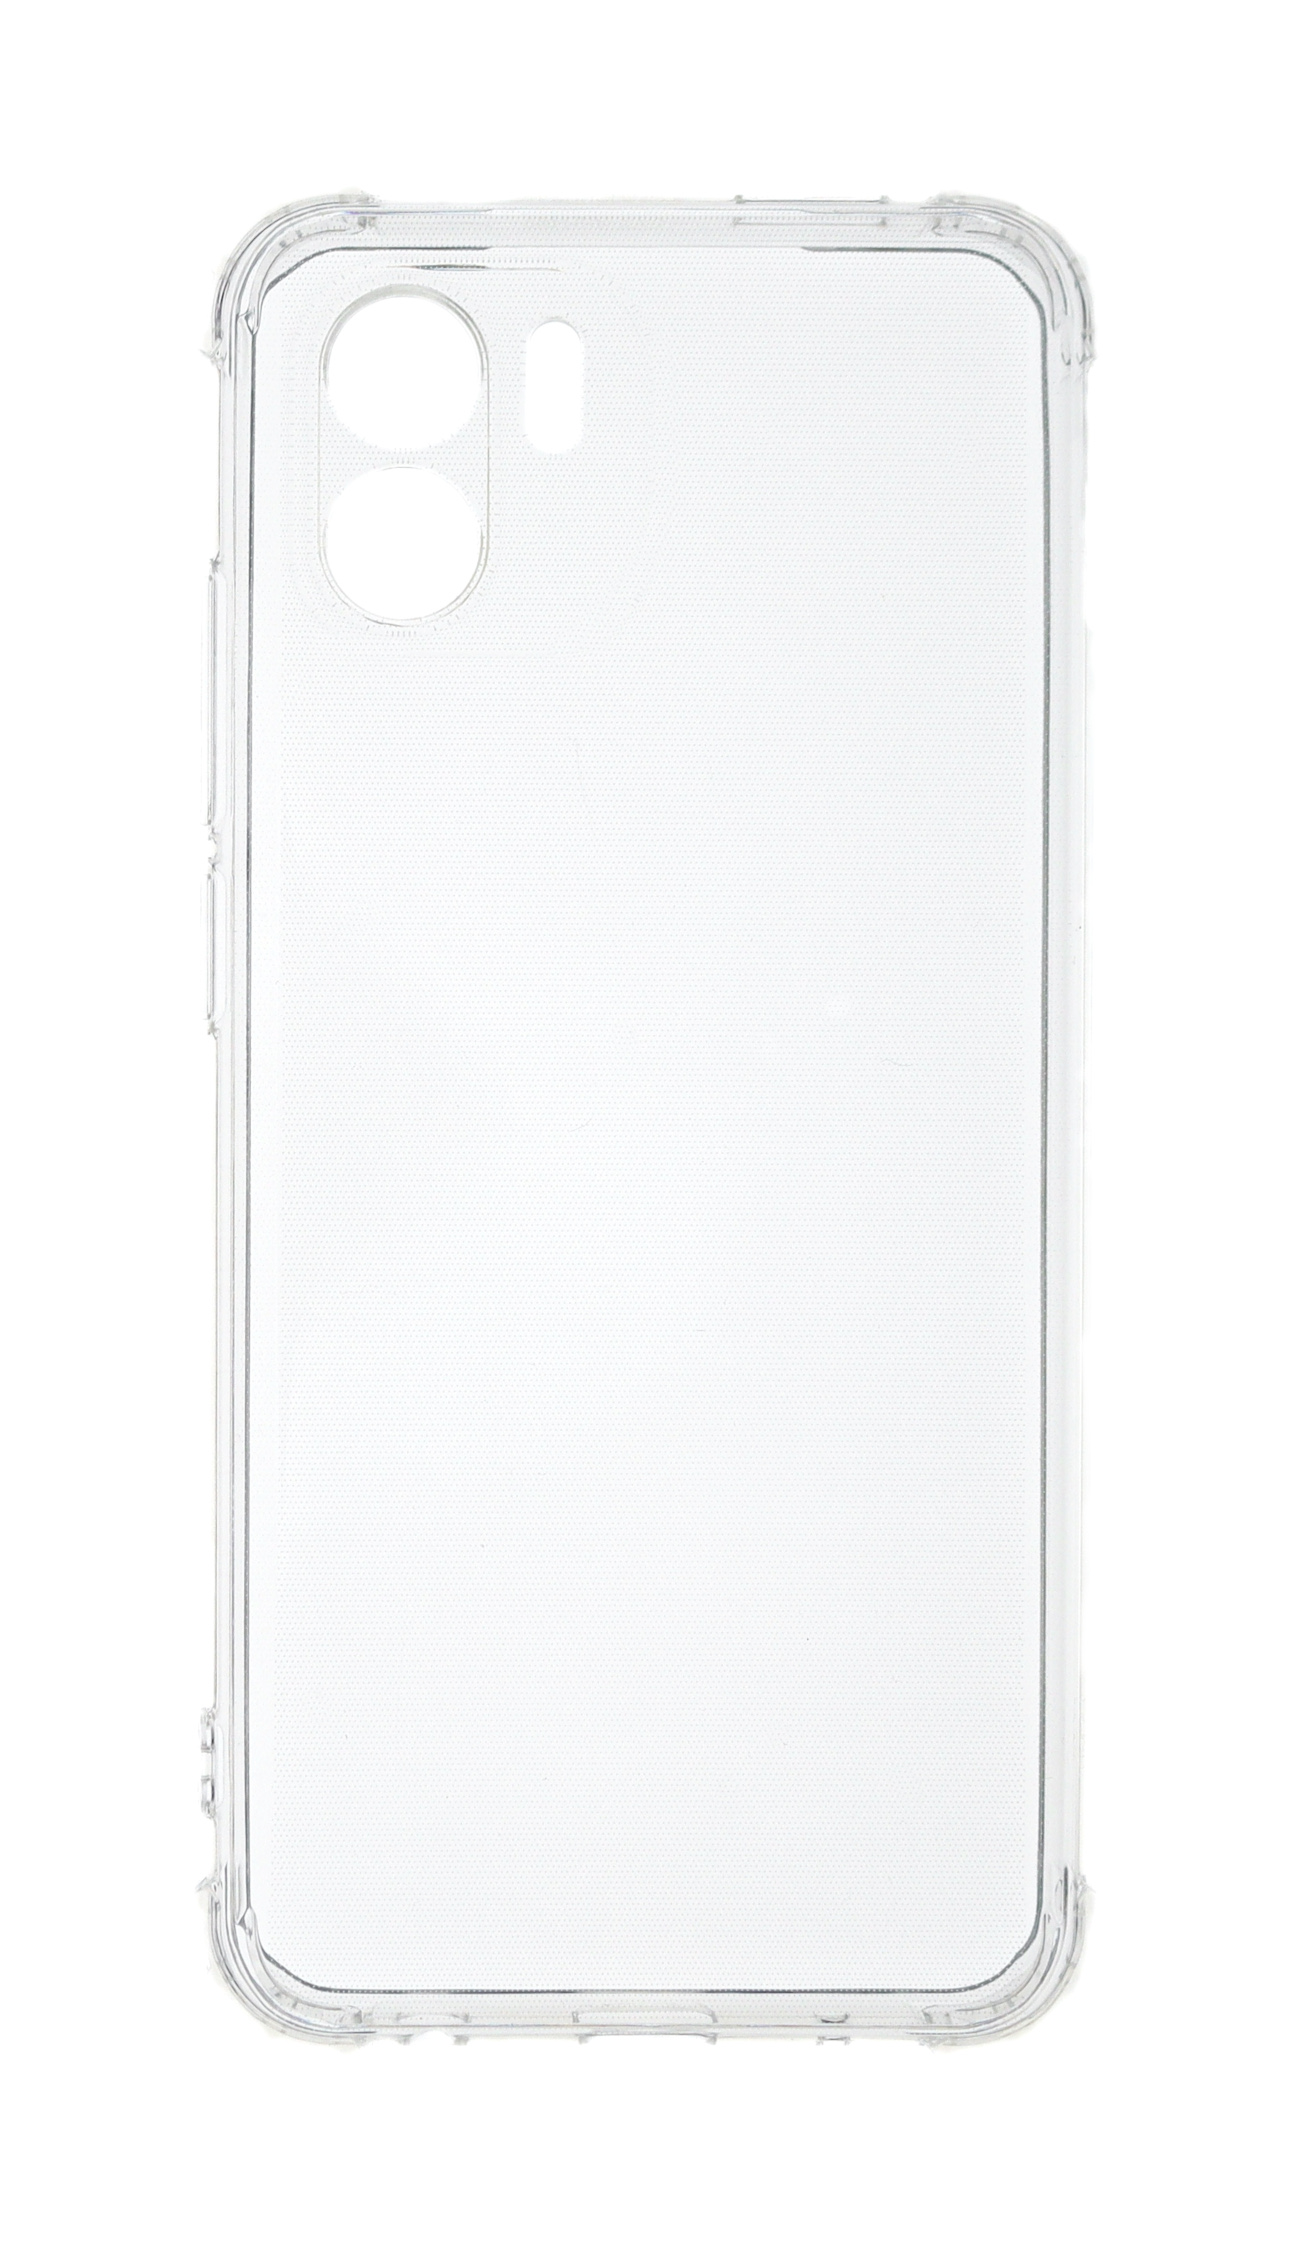 Backcover, Redmi JAMCOVER mm Anti Redmi Shock Xiaomi, A1, Case, Transparent A2, 1.5